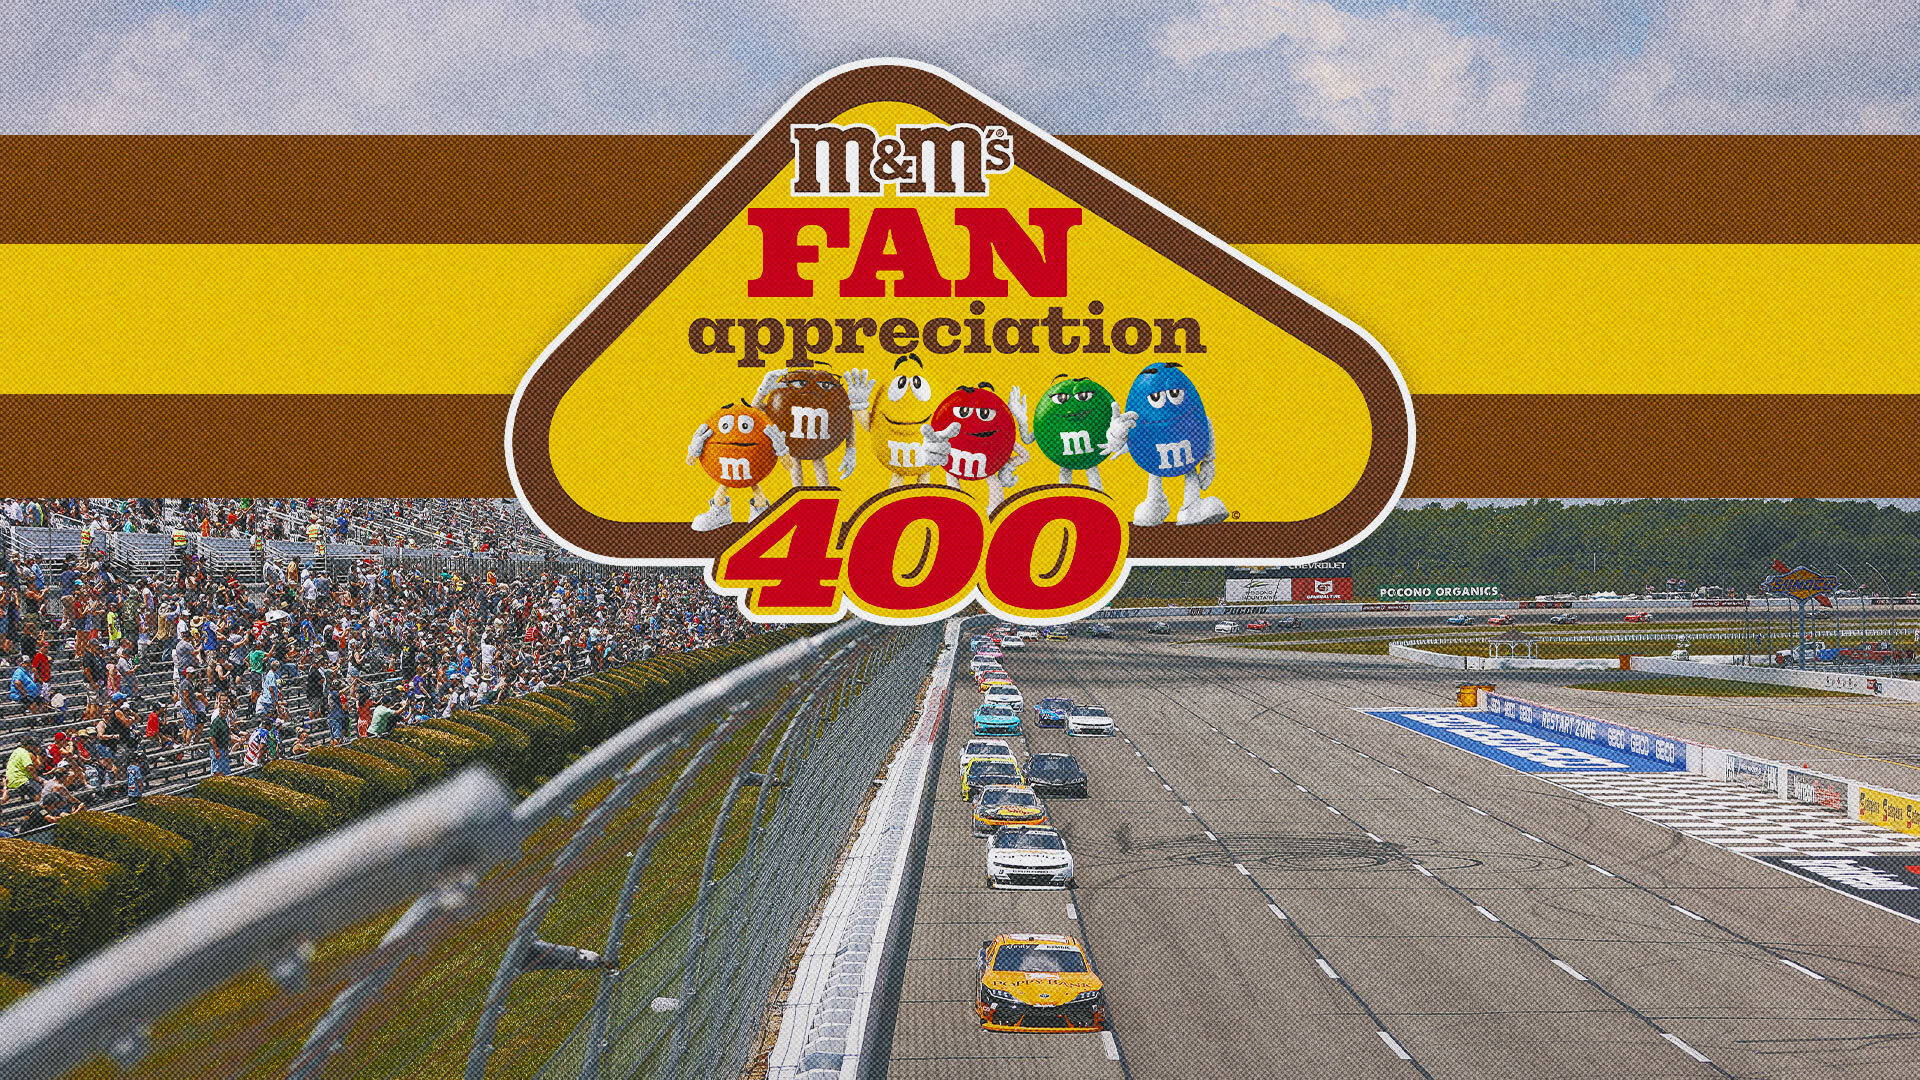 NASCAR M&M's Fan Appreciation 400: Denny Hamlin wins big at Pocono